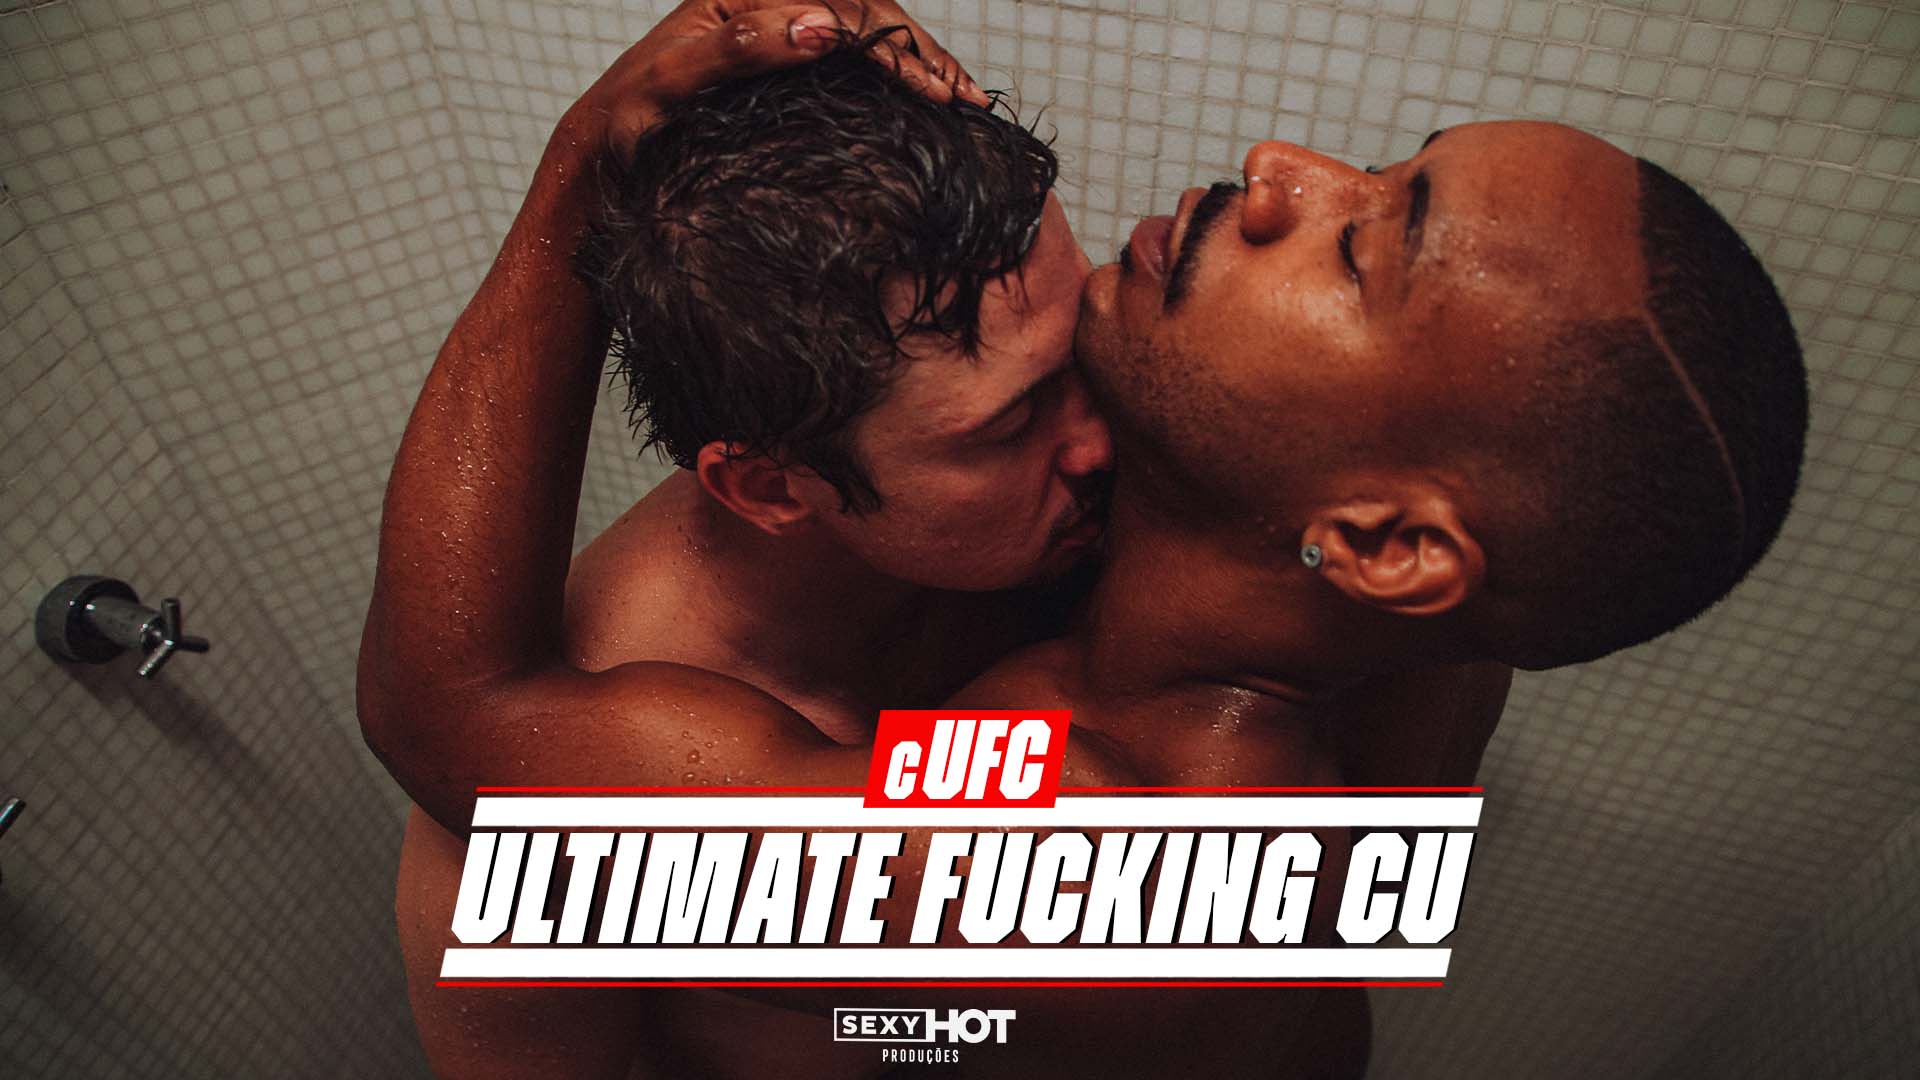 Trailer CUFC – Ultimate Fucking Cu